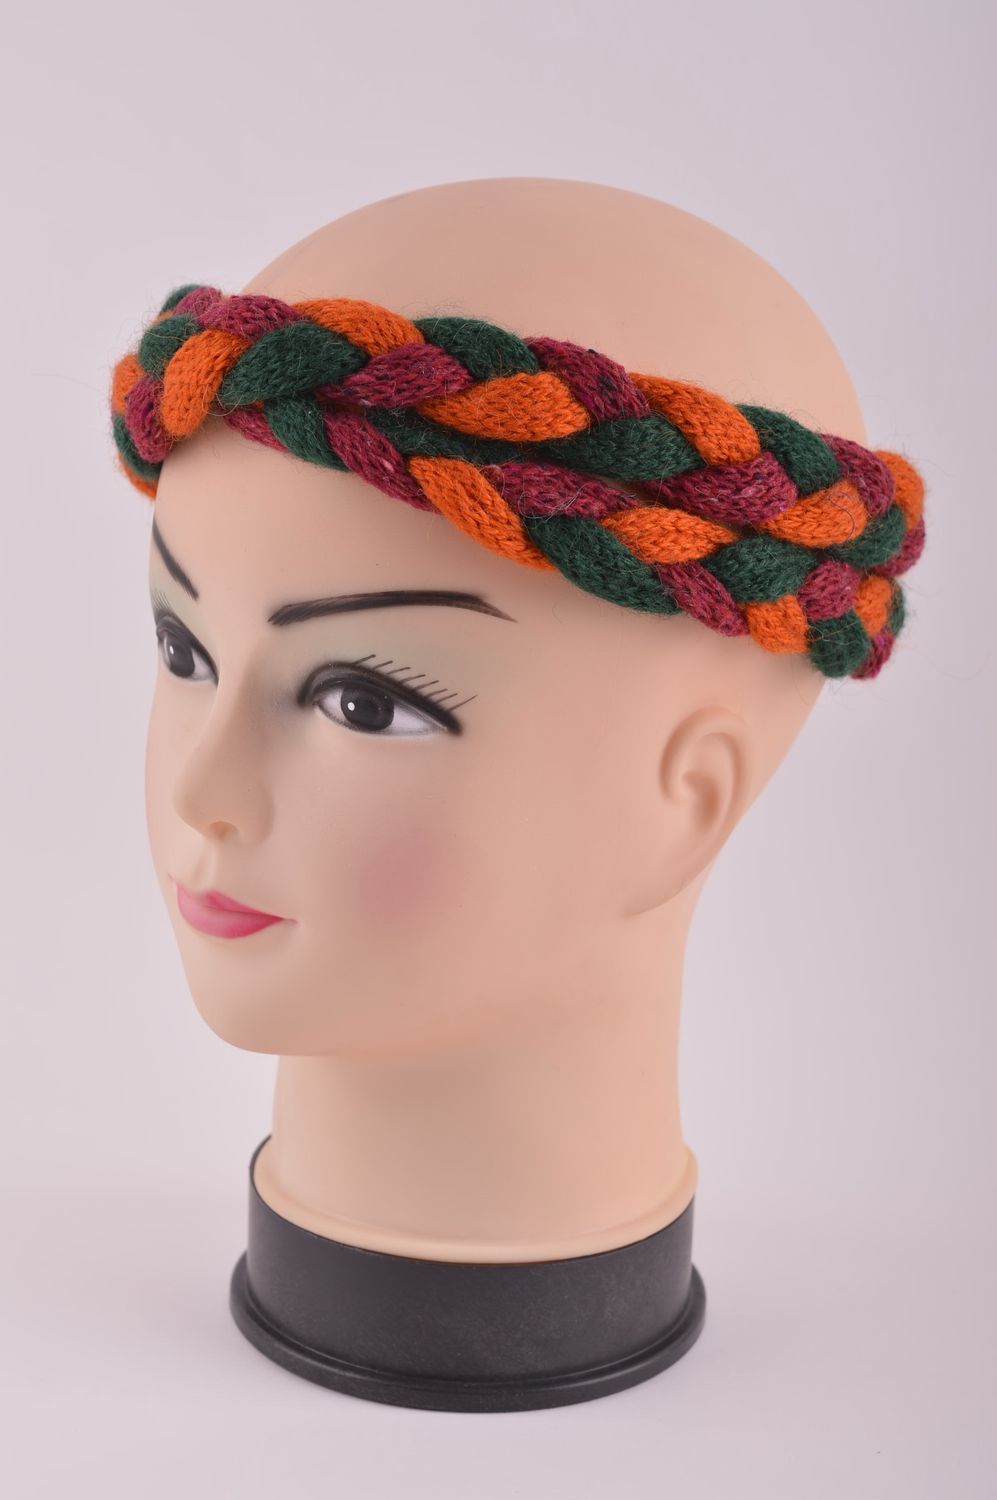 Handmade designer knitted headband warm headband fashion accessories for women photo 2